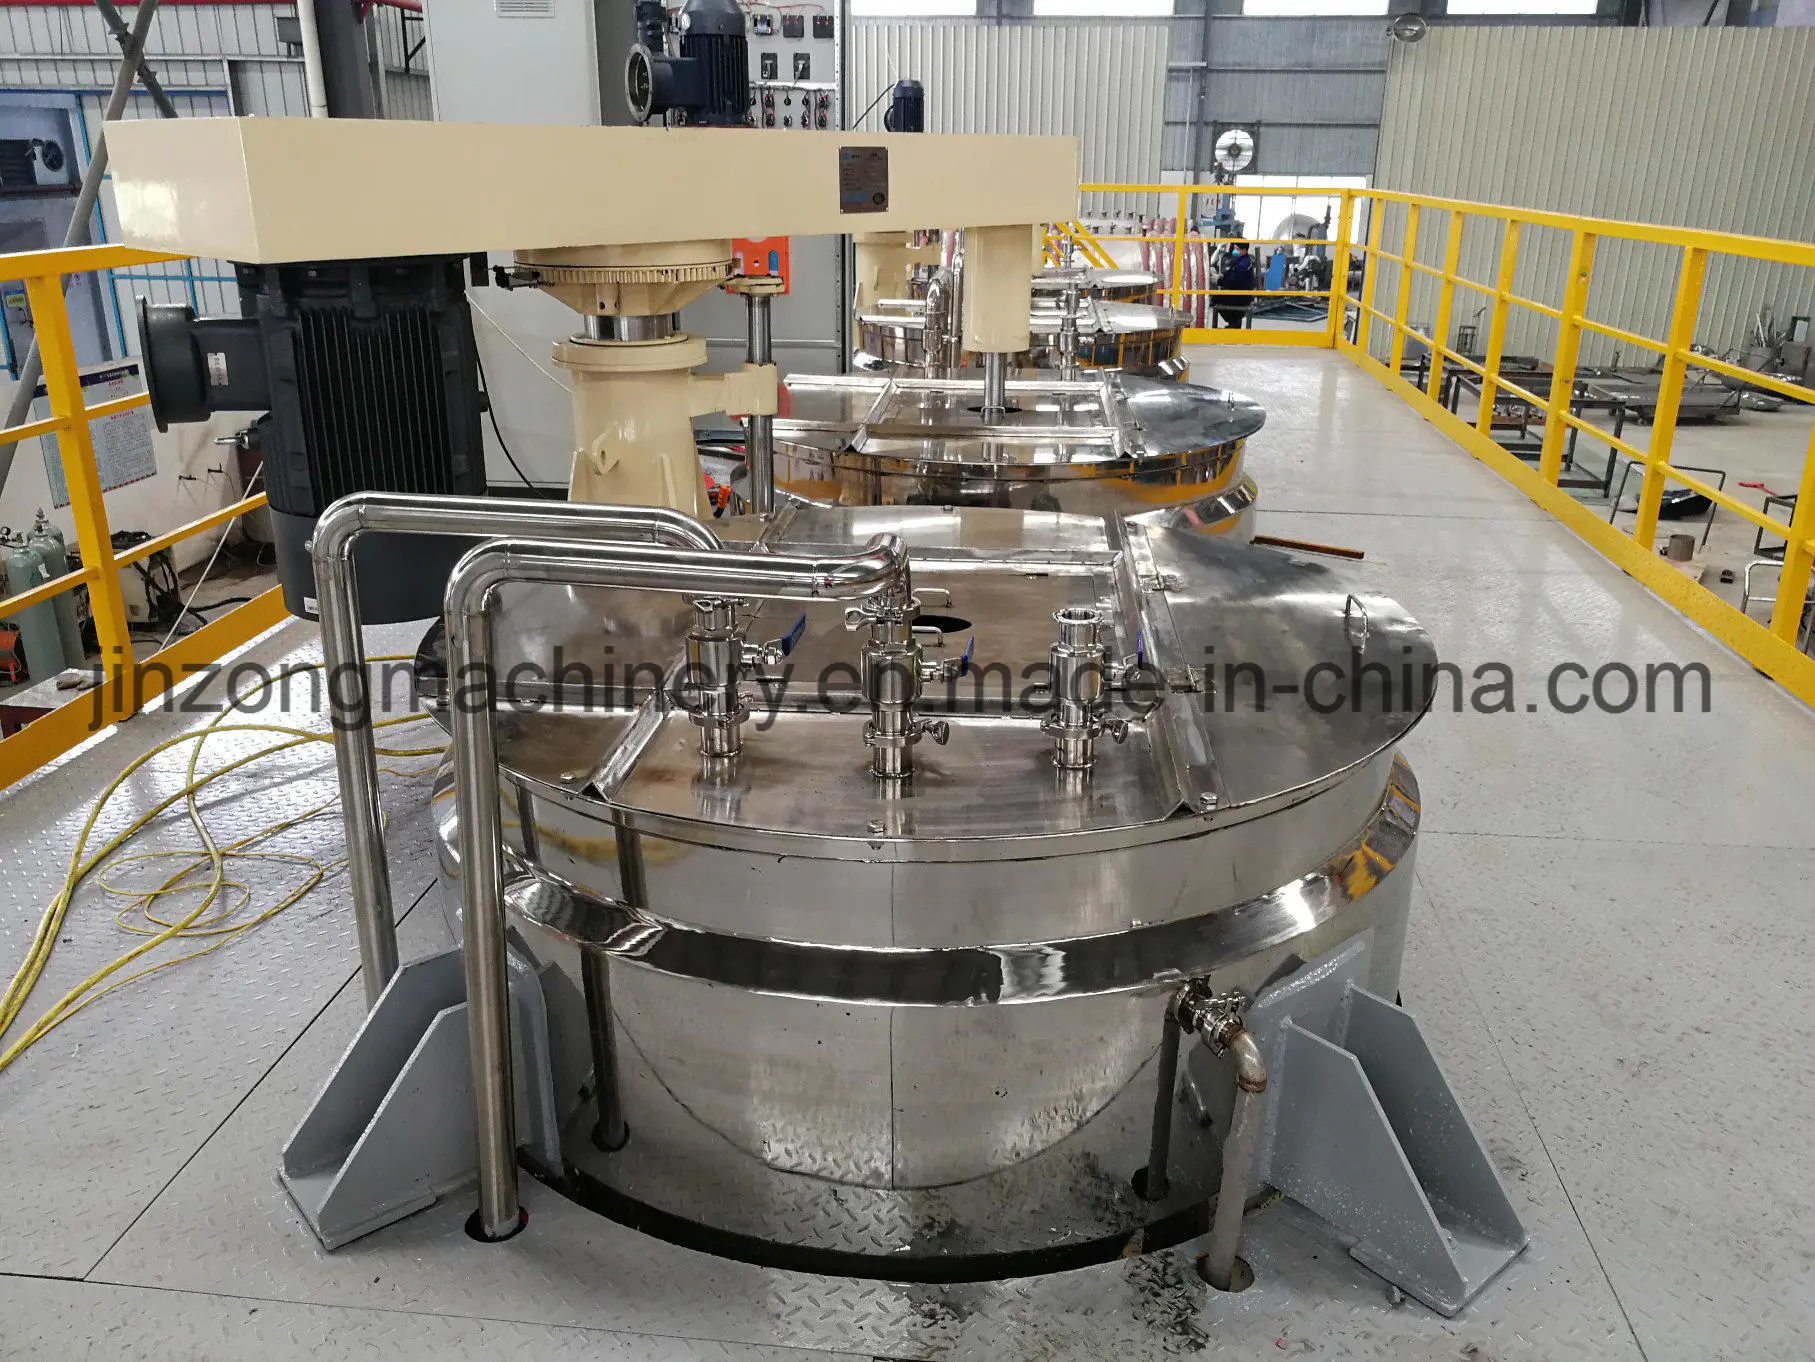 China Platform Paint Disperser Making Production Machine Price